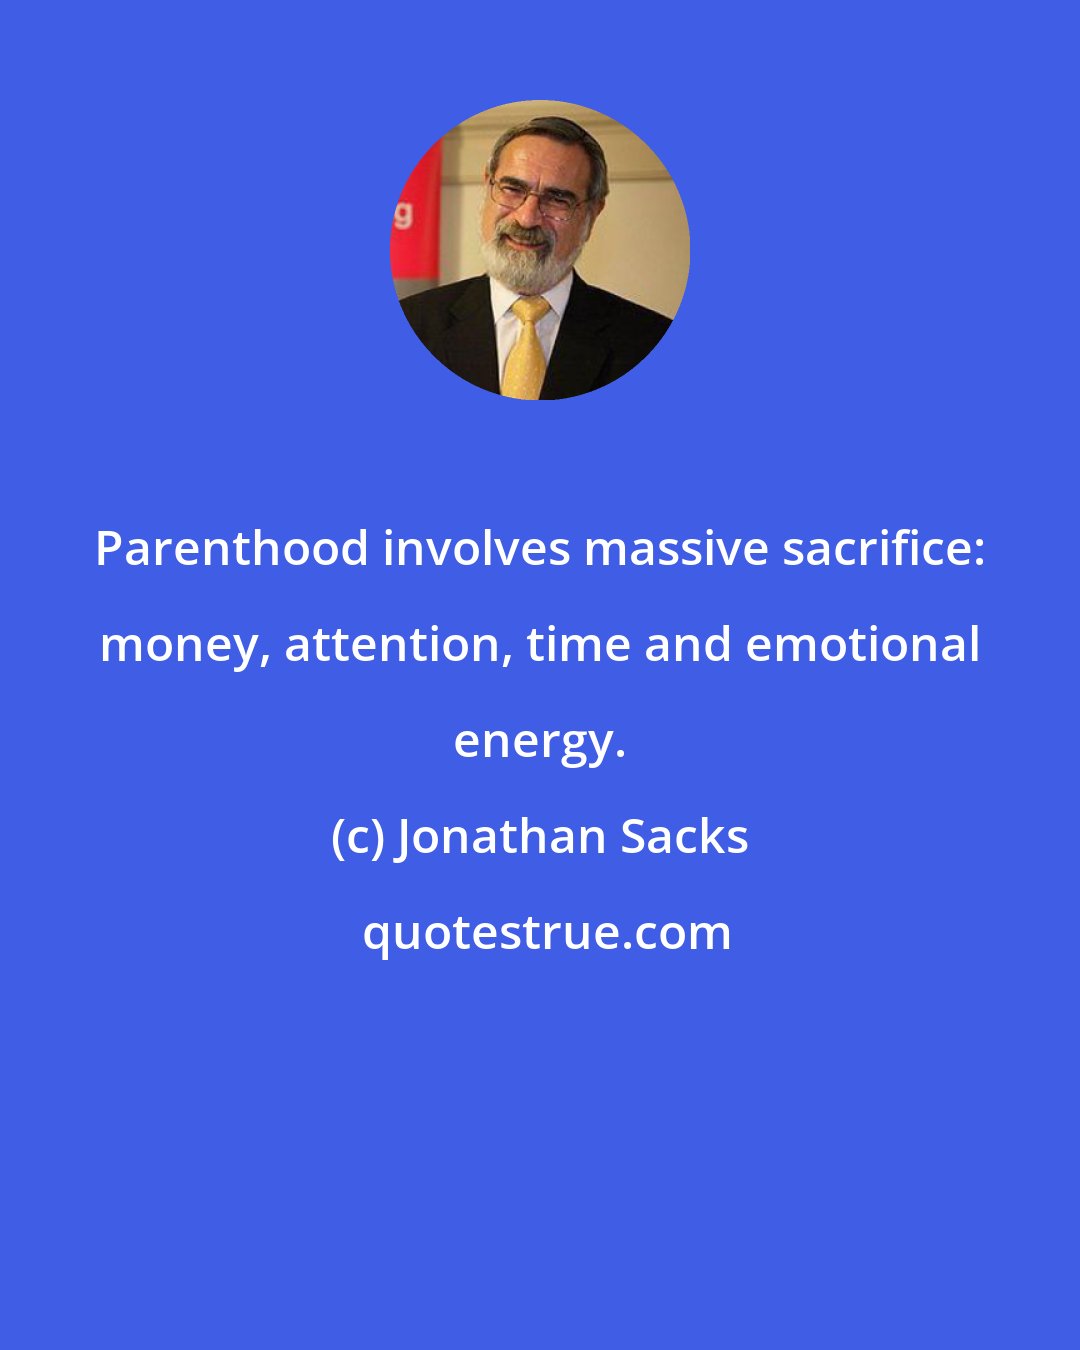 Jonathan Sacks: Parenthood involves massive sacrifice: money, attention, time and emotional energy.